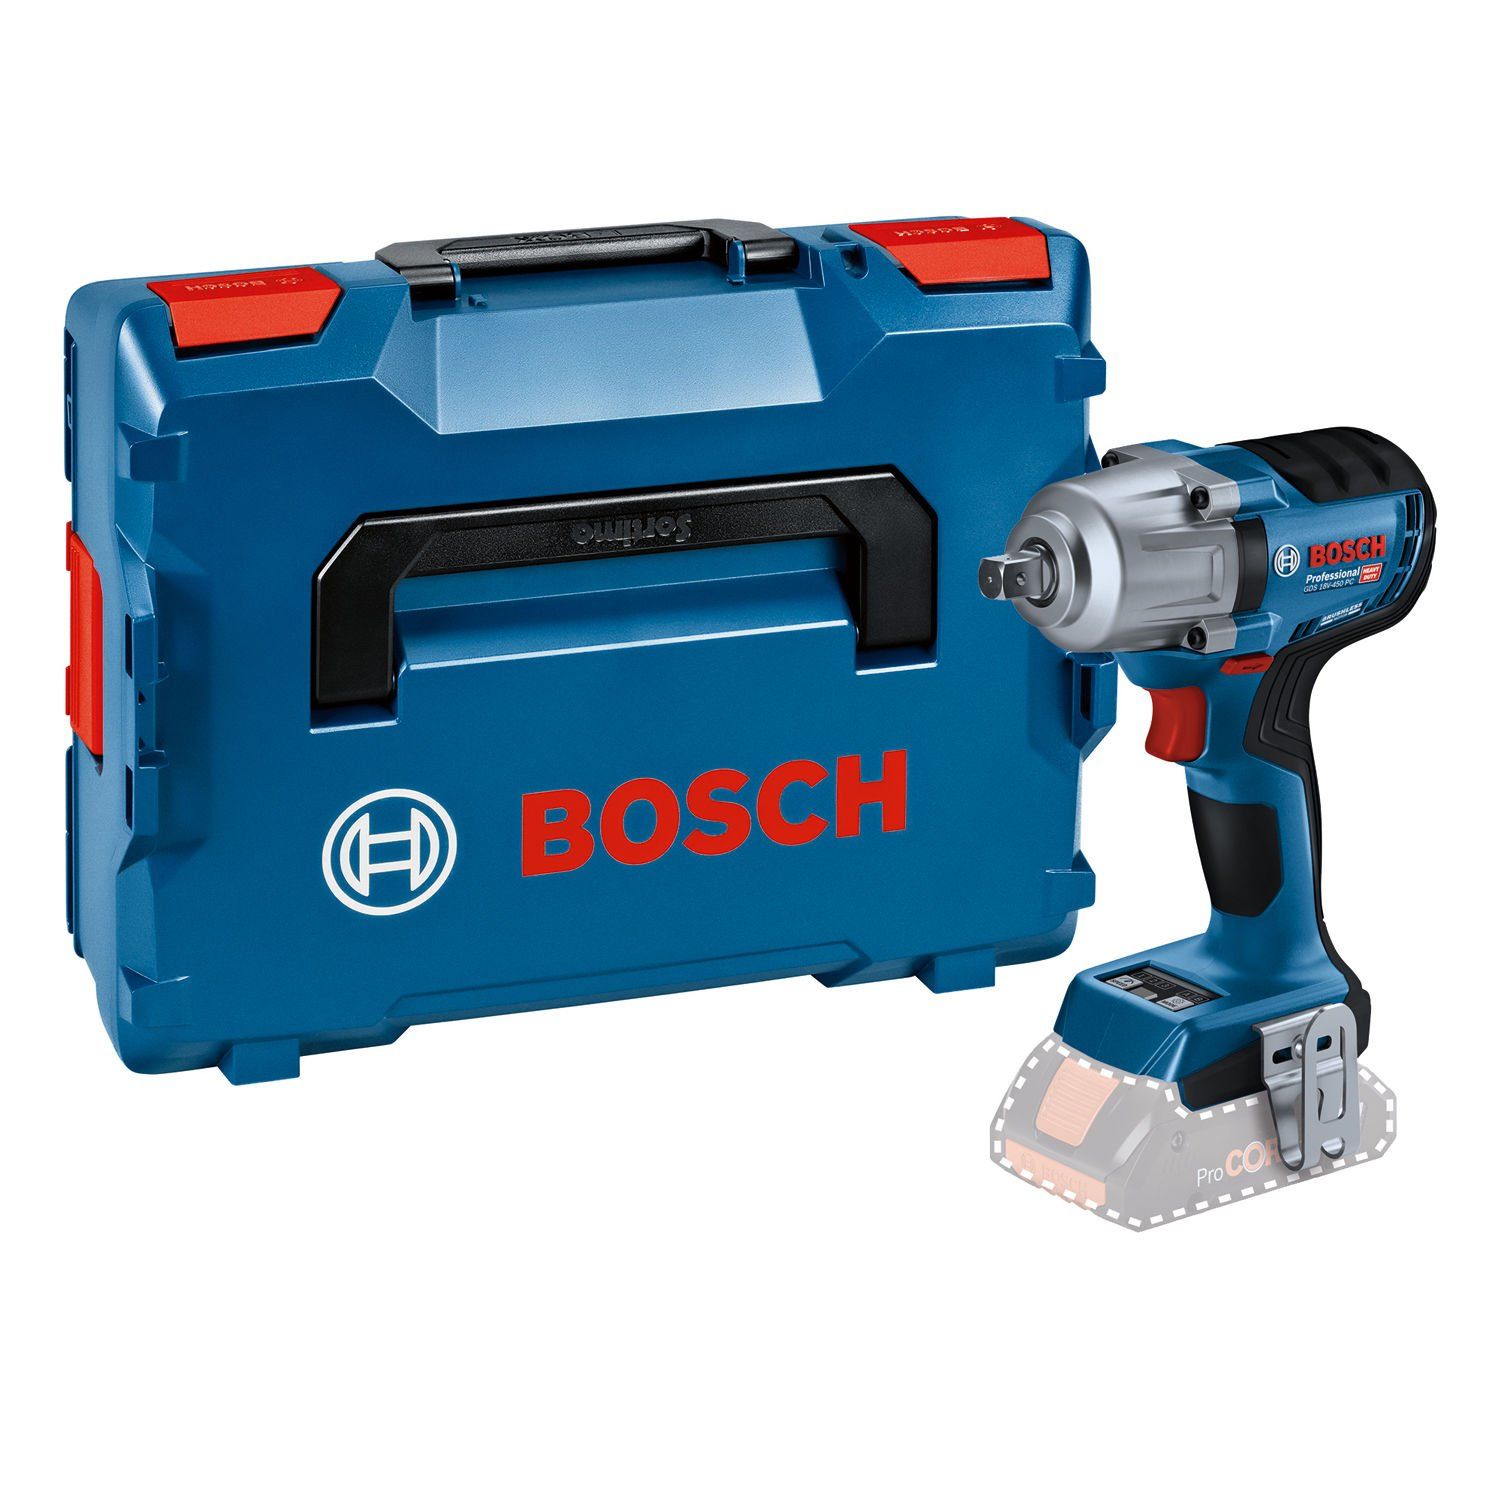 Bosch Gds 18 V-450 Pc Şarjlı Somun Sıkma Sökme Makinası 450 Nm 18 Volt (Akü ve Şarj Aleti Hariç)